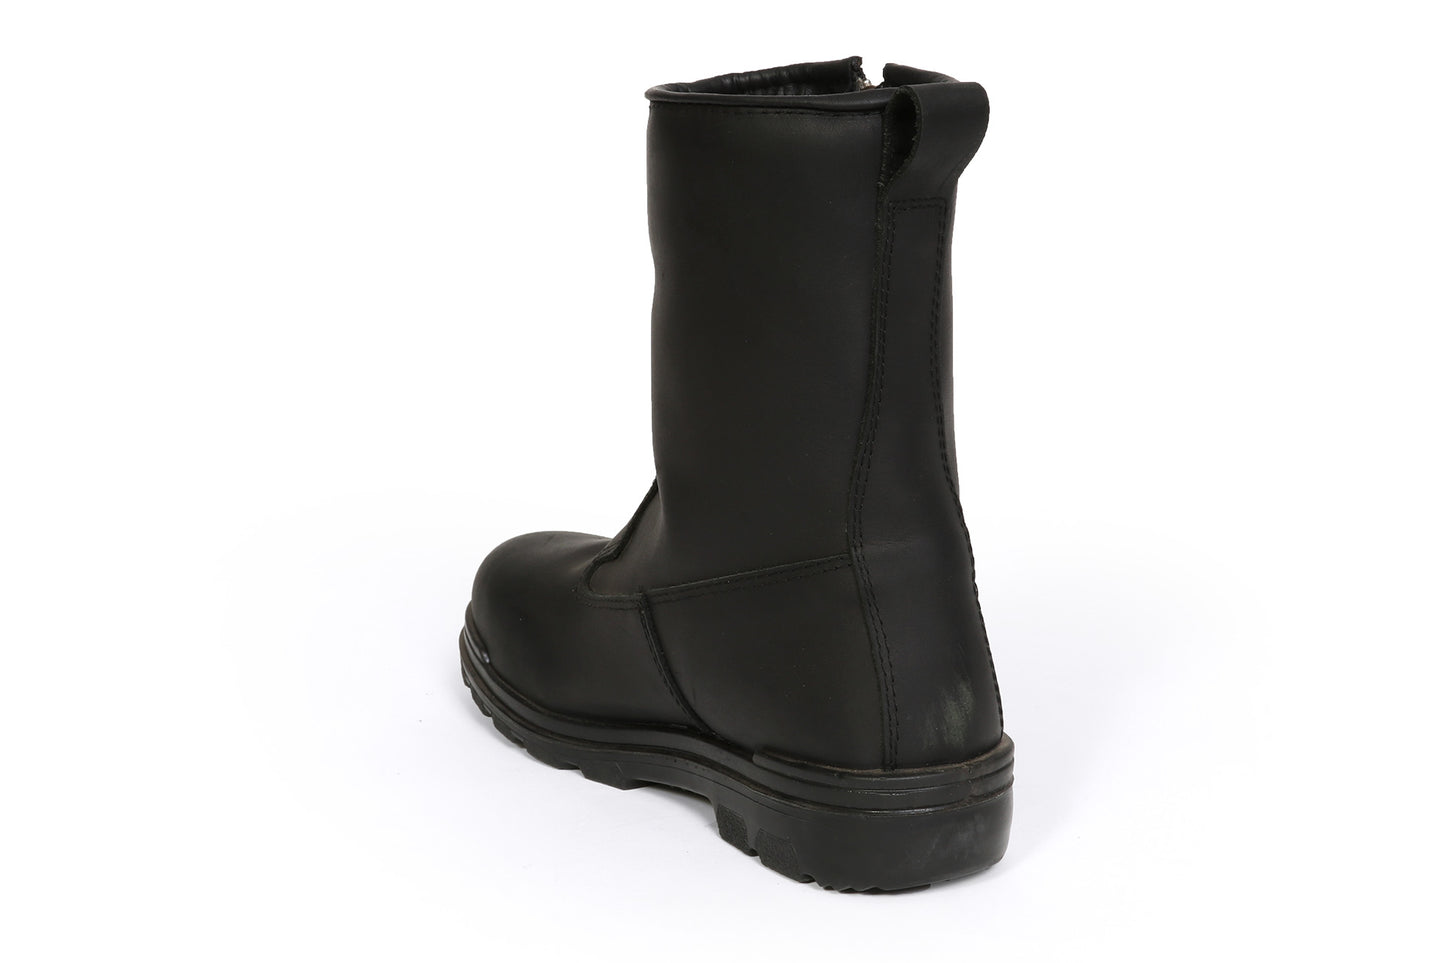 Bucks® Ryder - 8" Black Zip-up CSA Steel-toe Work Boot